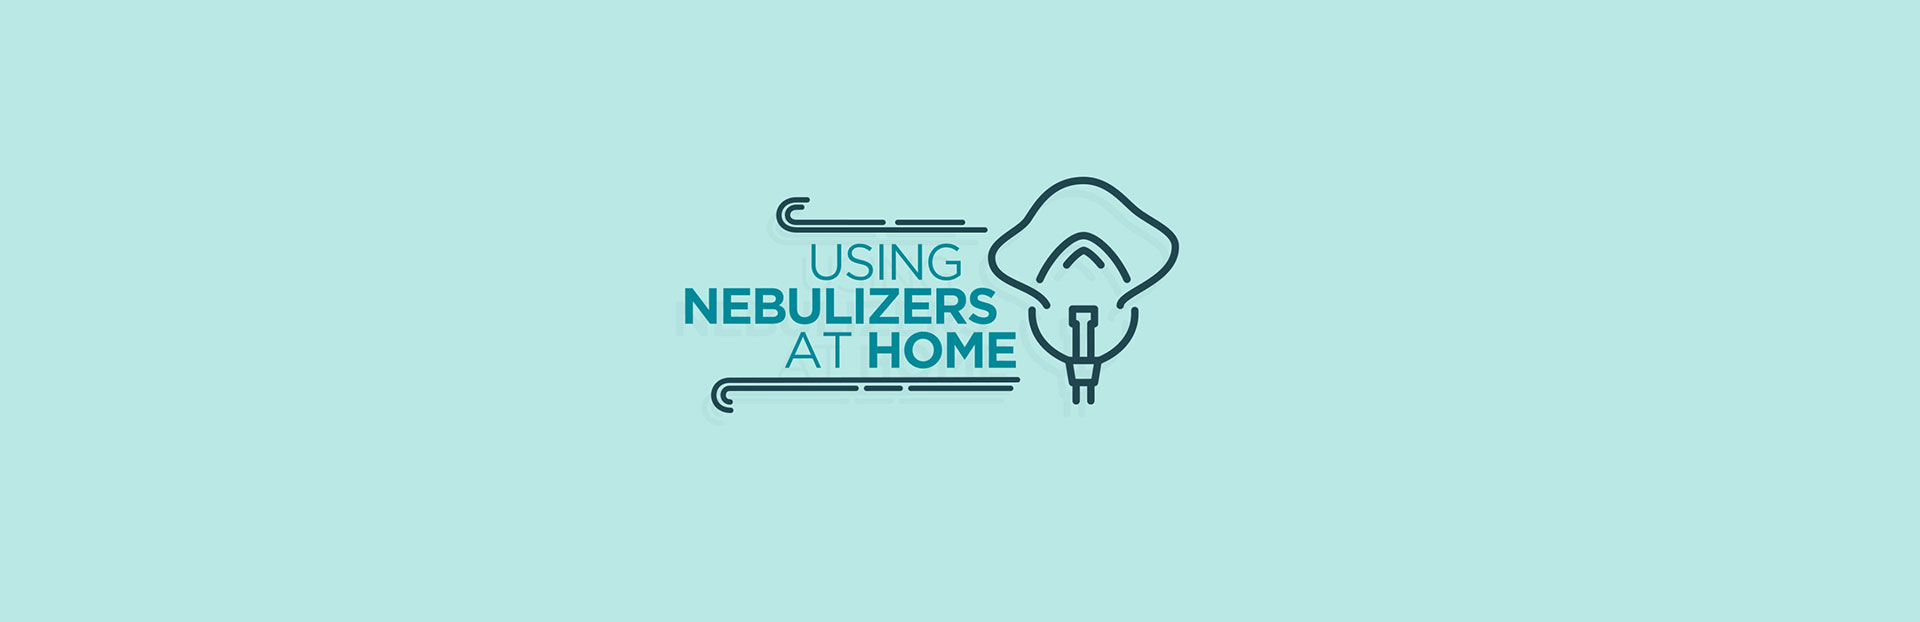 safe nebulization at home